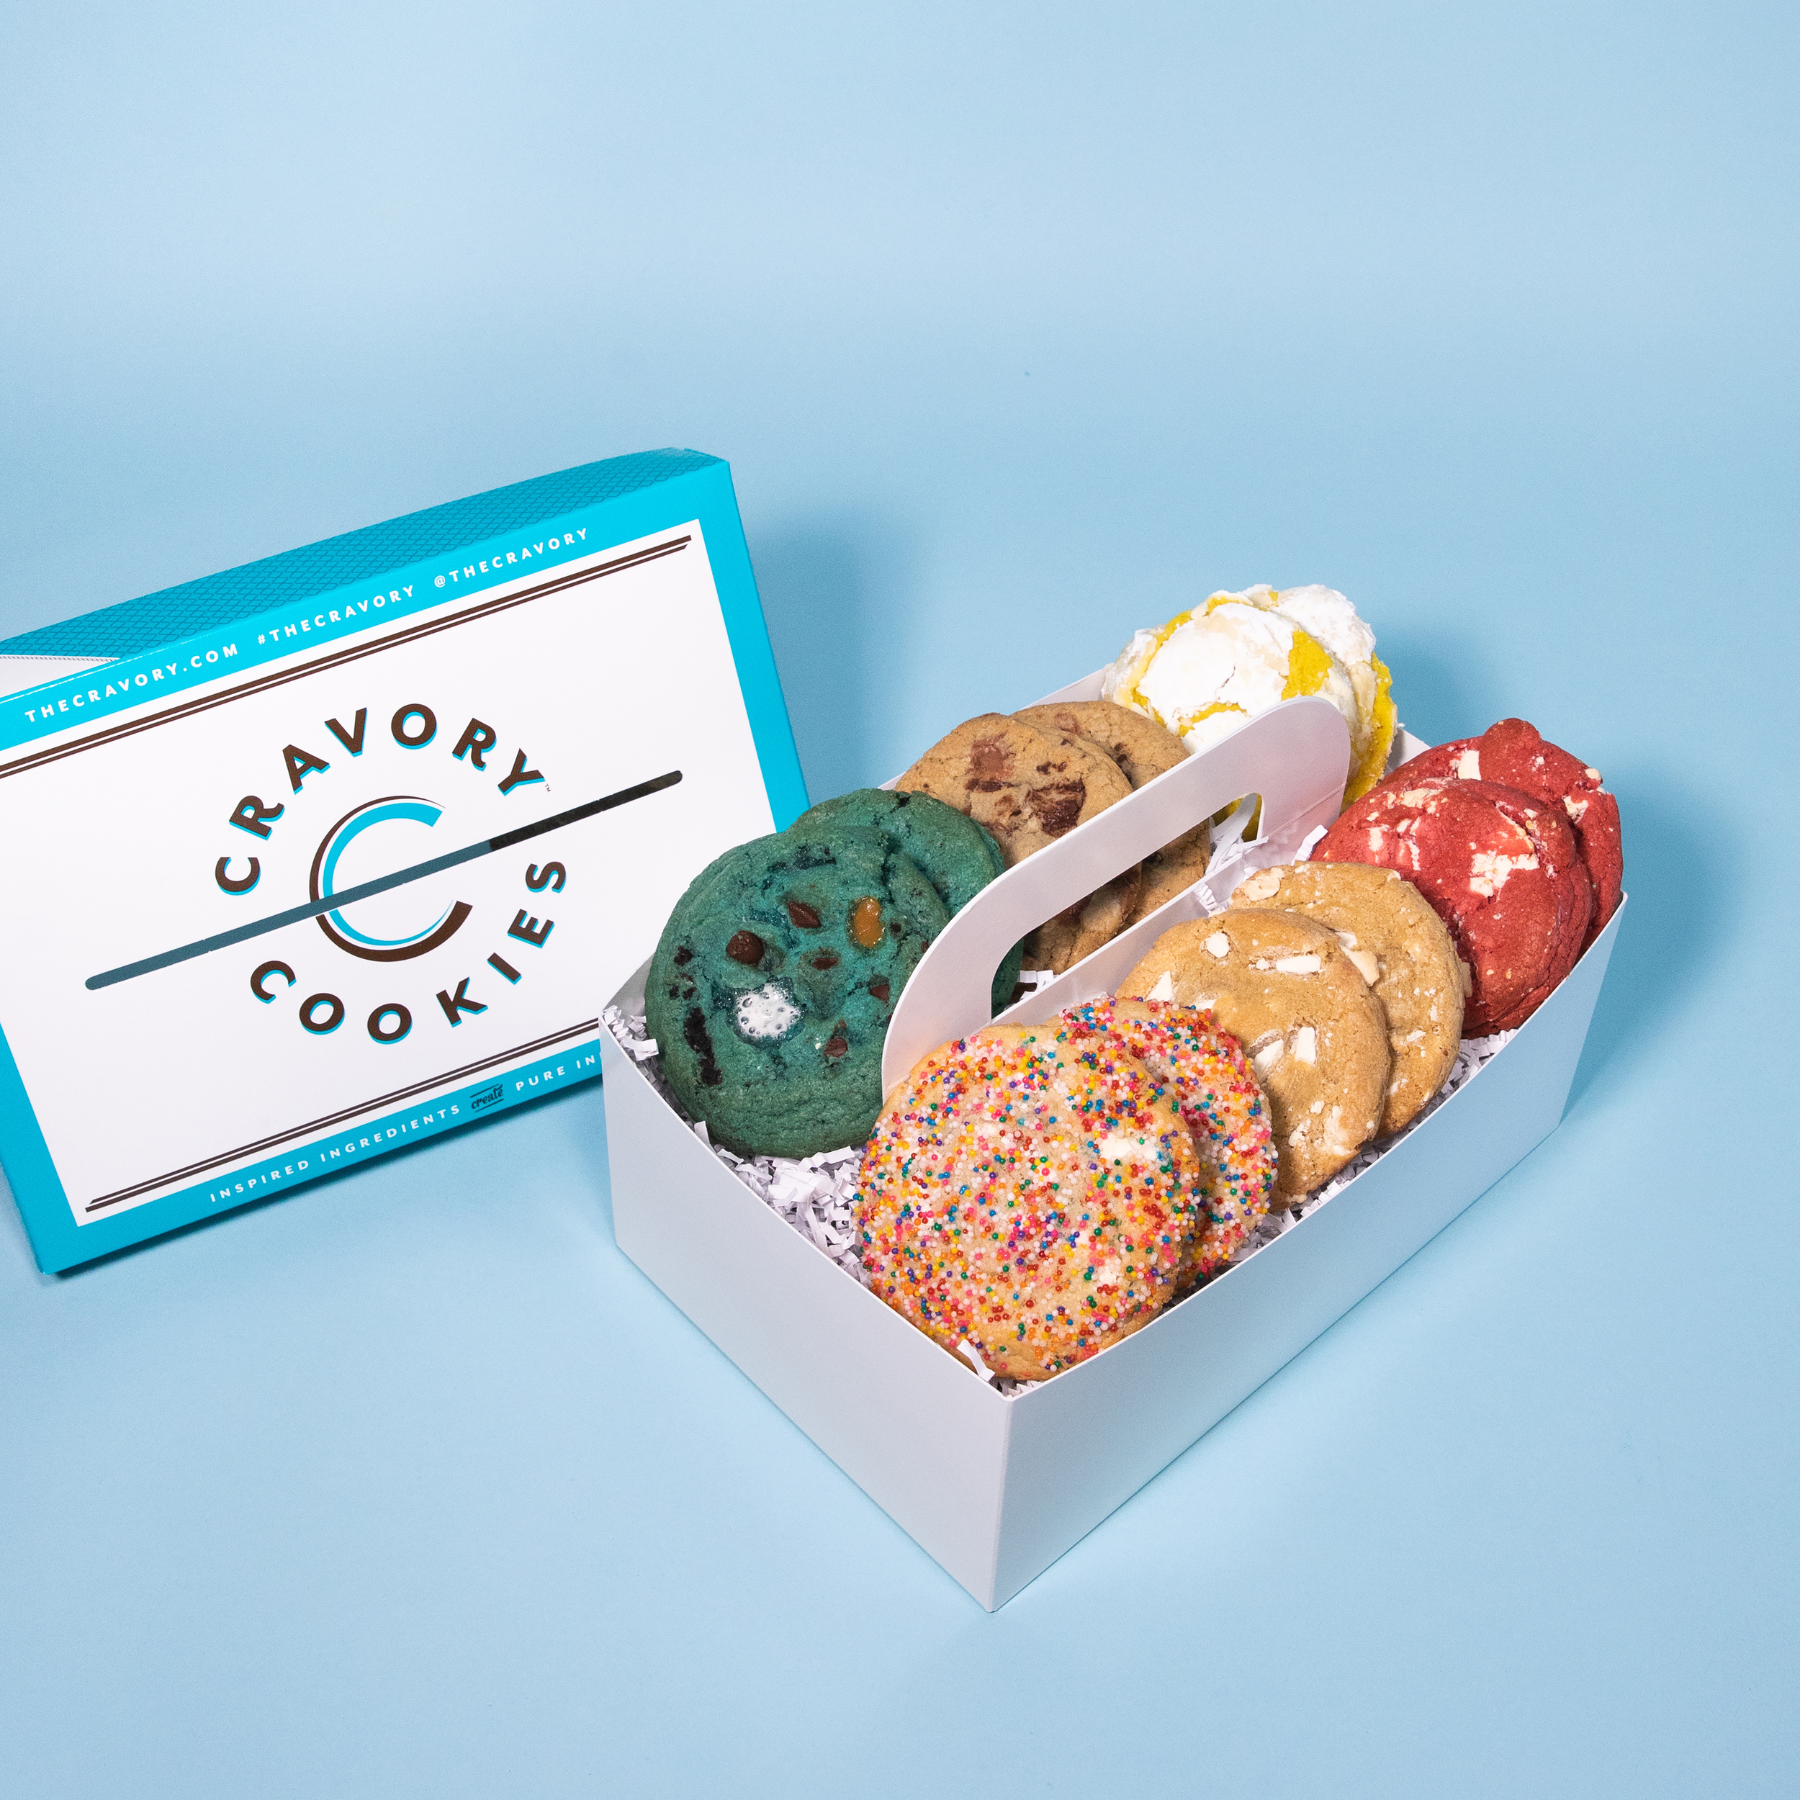 OSU Striped One Dozen Cookie Gift Box - Assorted Flavors